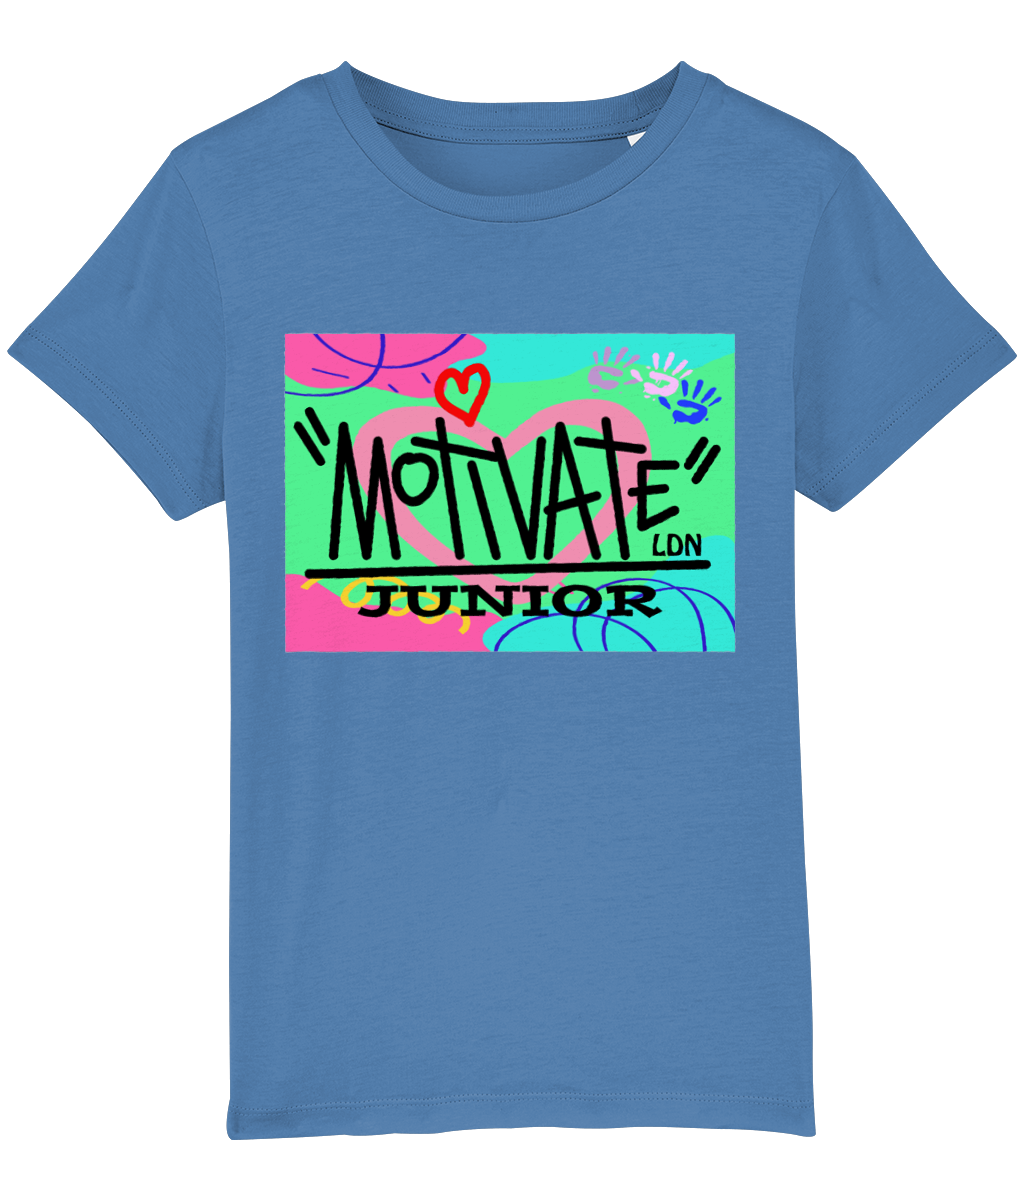 Motivate LDN Junior Kids T-Shirt (extra colours)